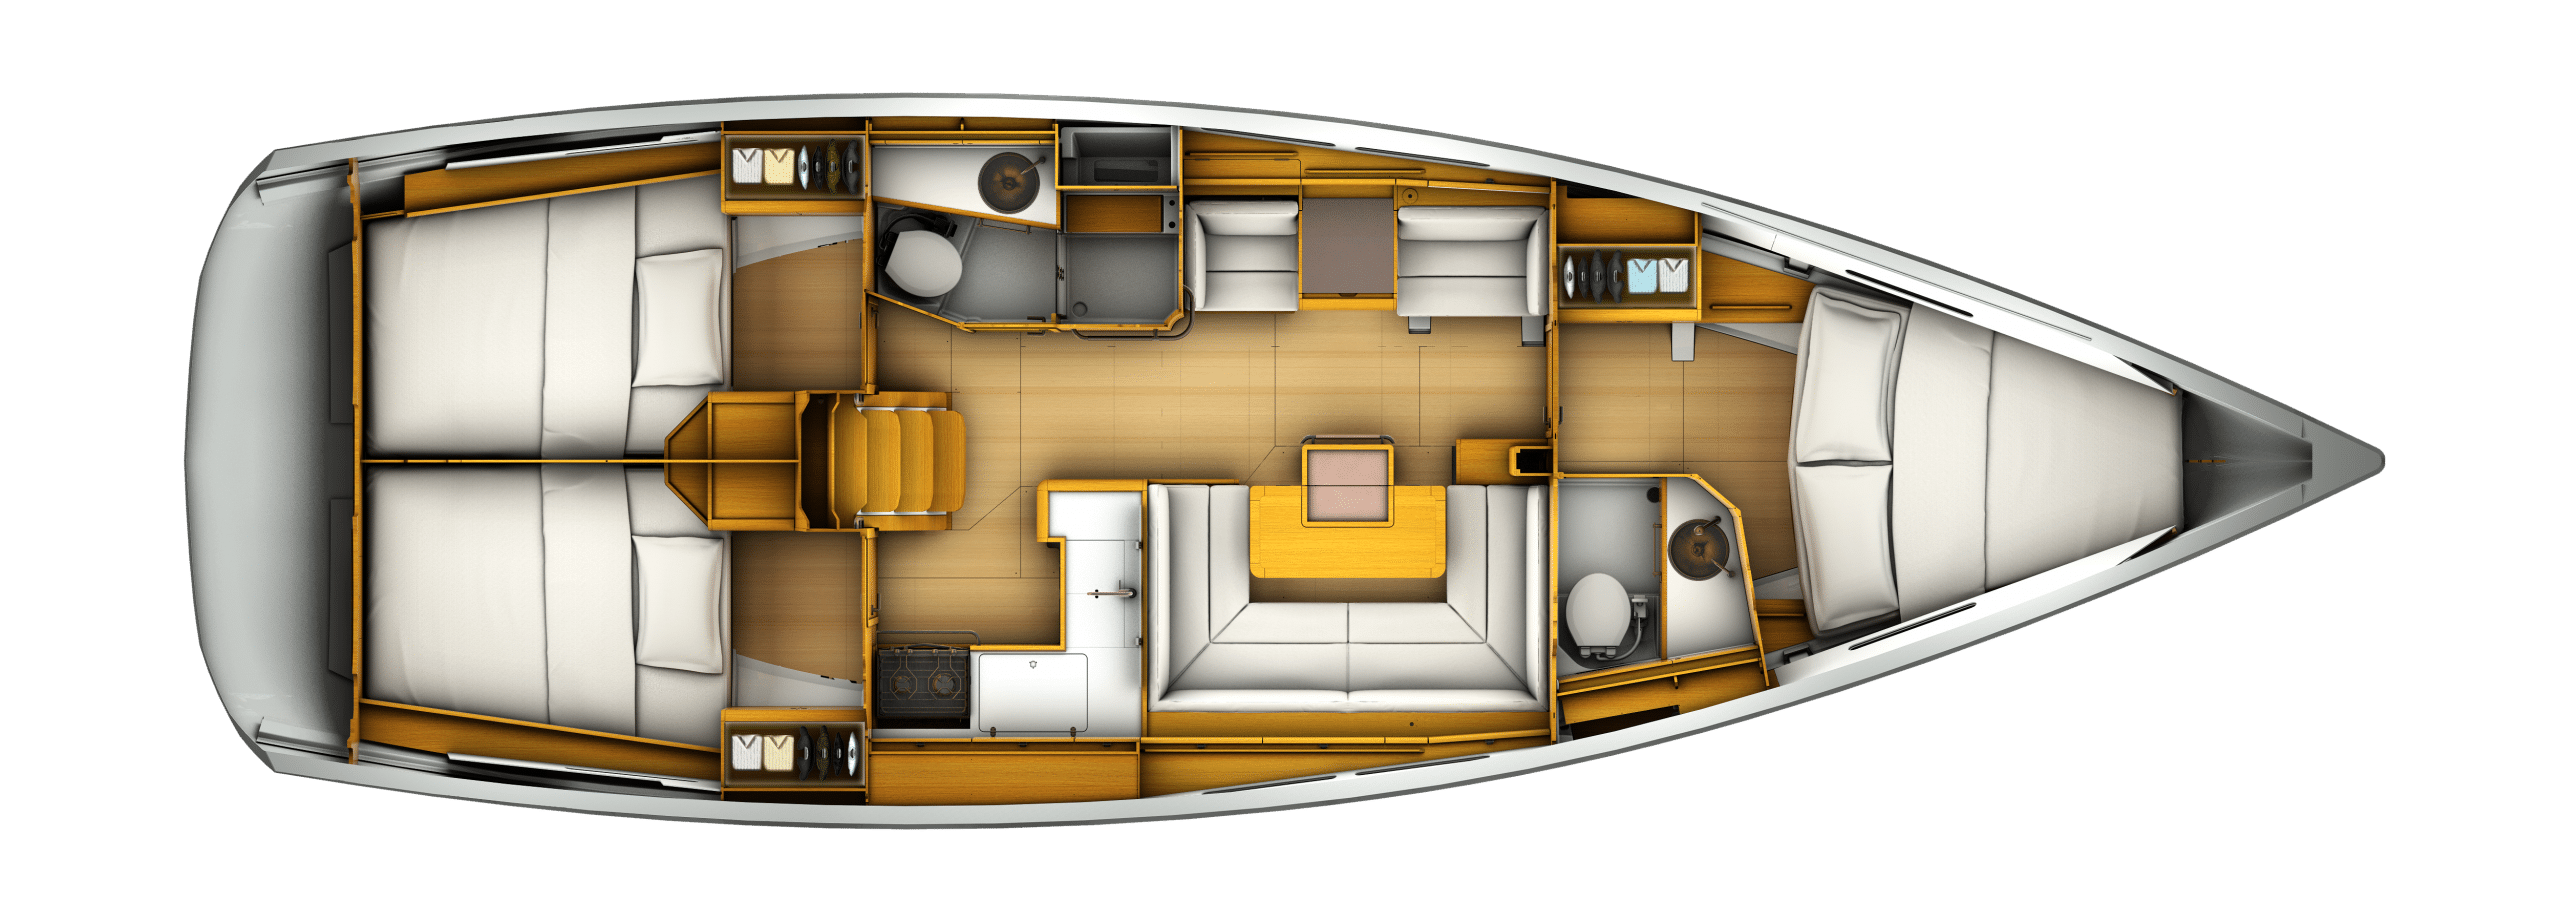 jeanneau-sun-odyssey-409-layout-3-cabins-2-heads